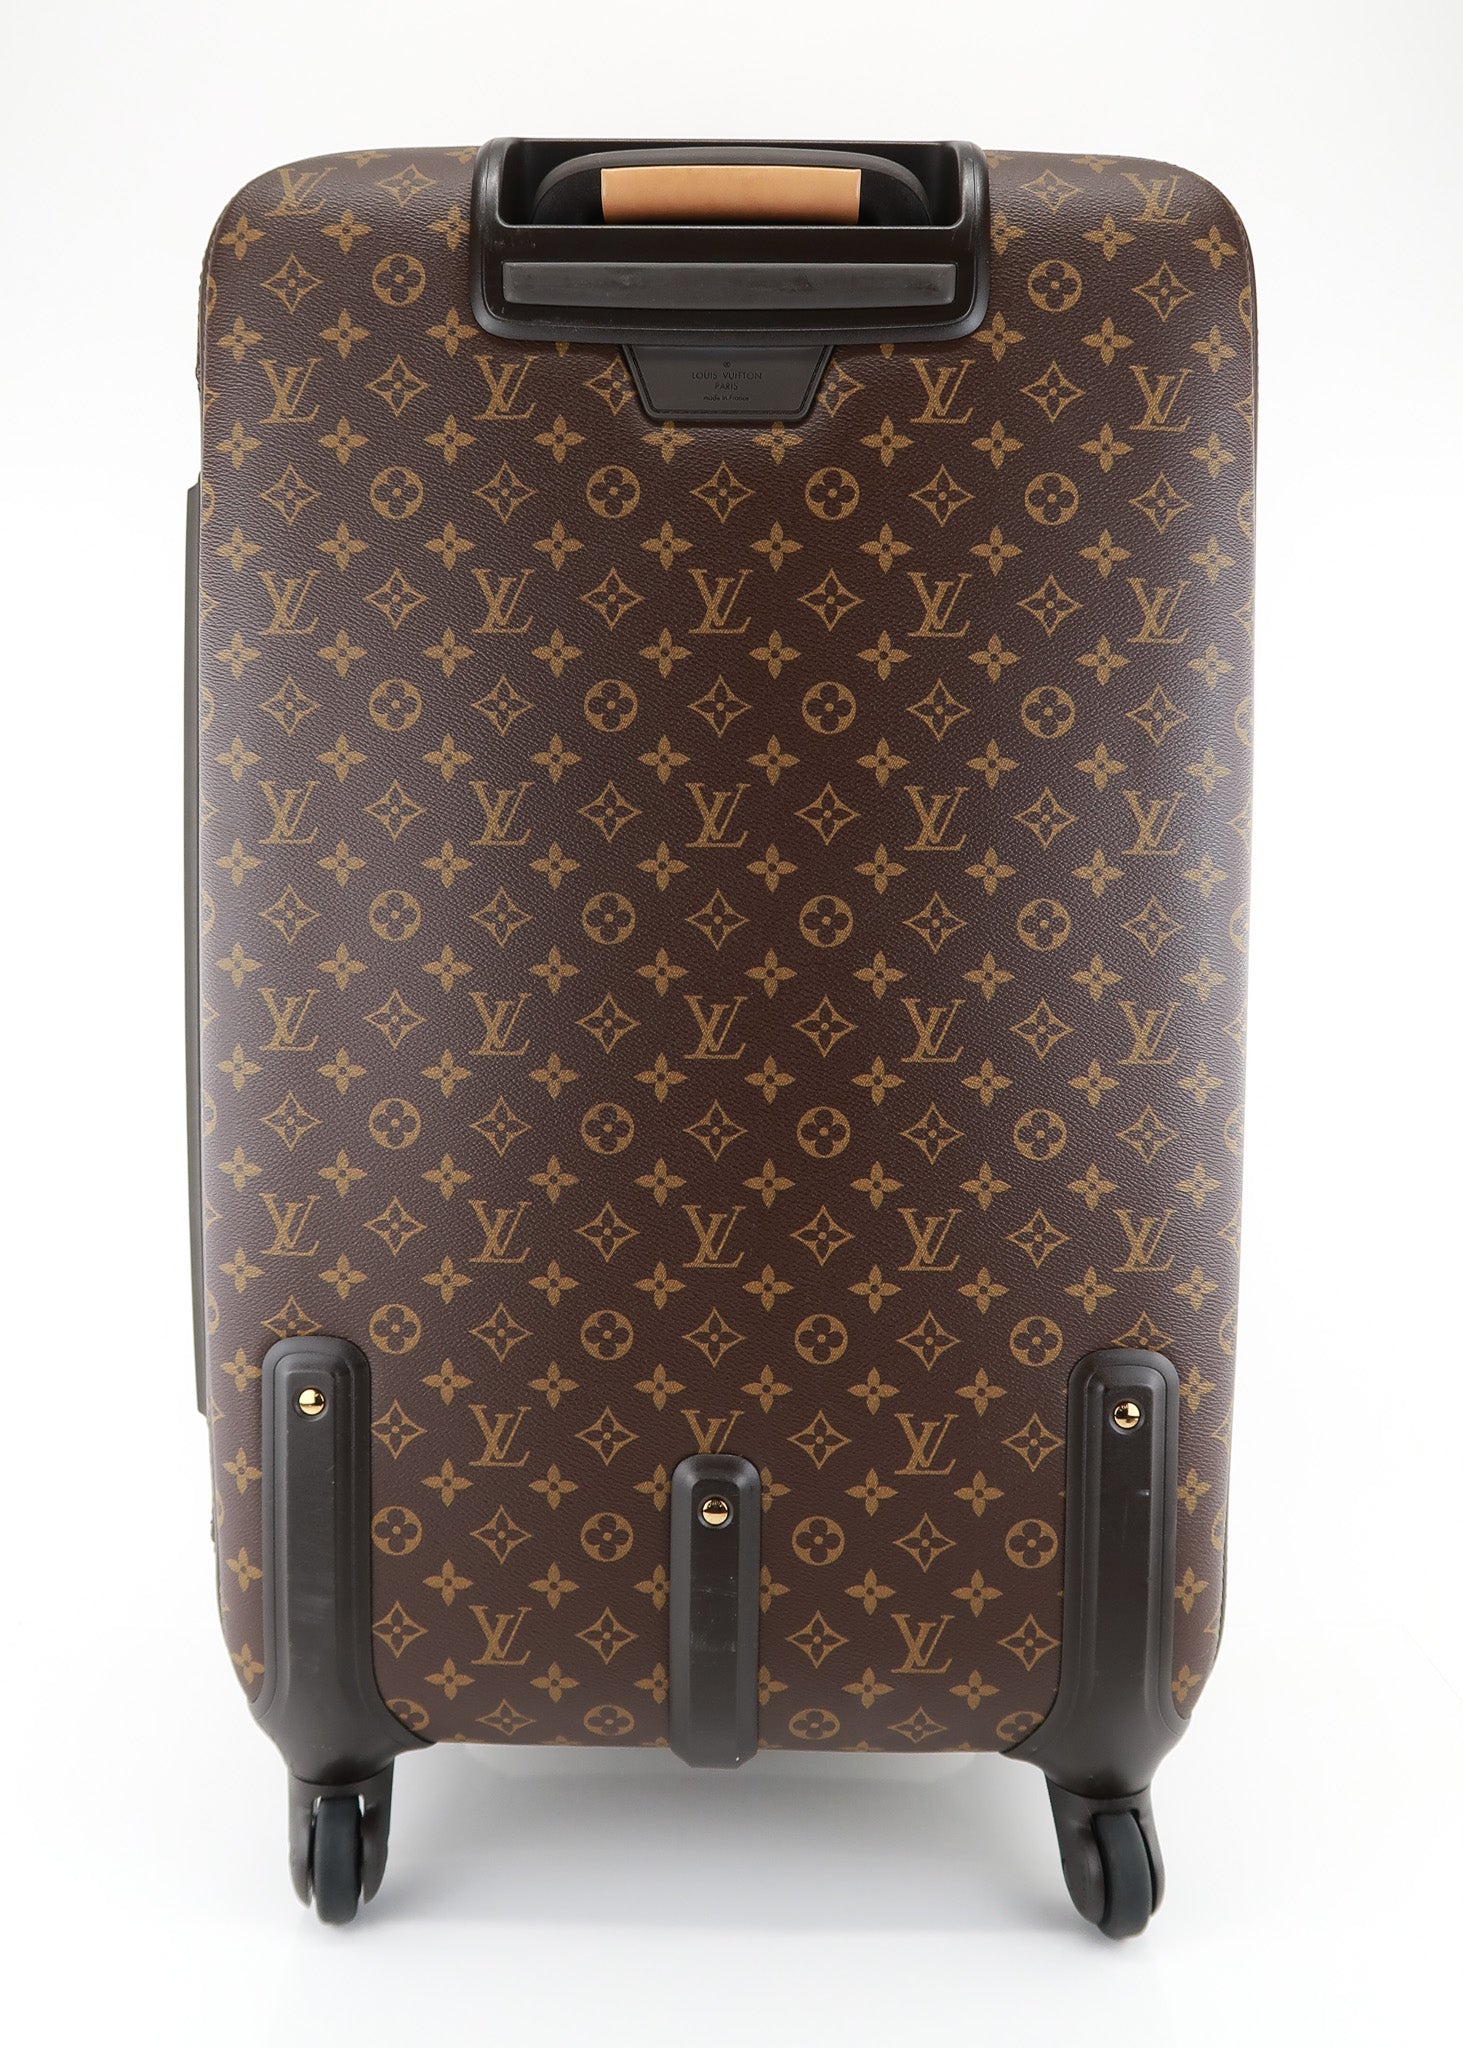 Louis Vuitton Monogram Zephyr 70 trolley case Suitcase, Luggage